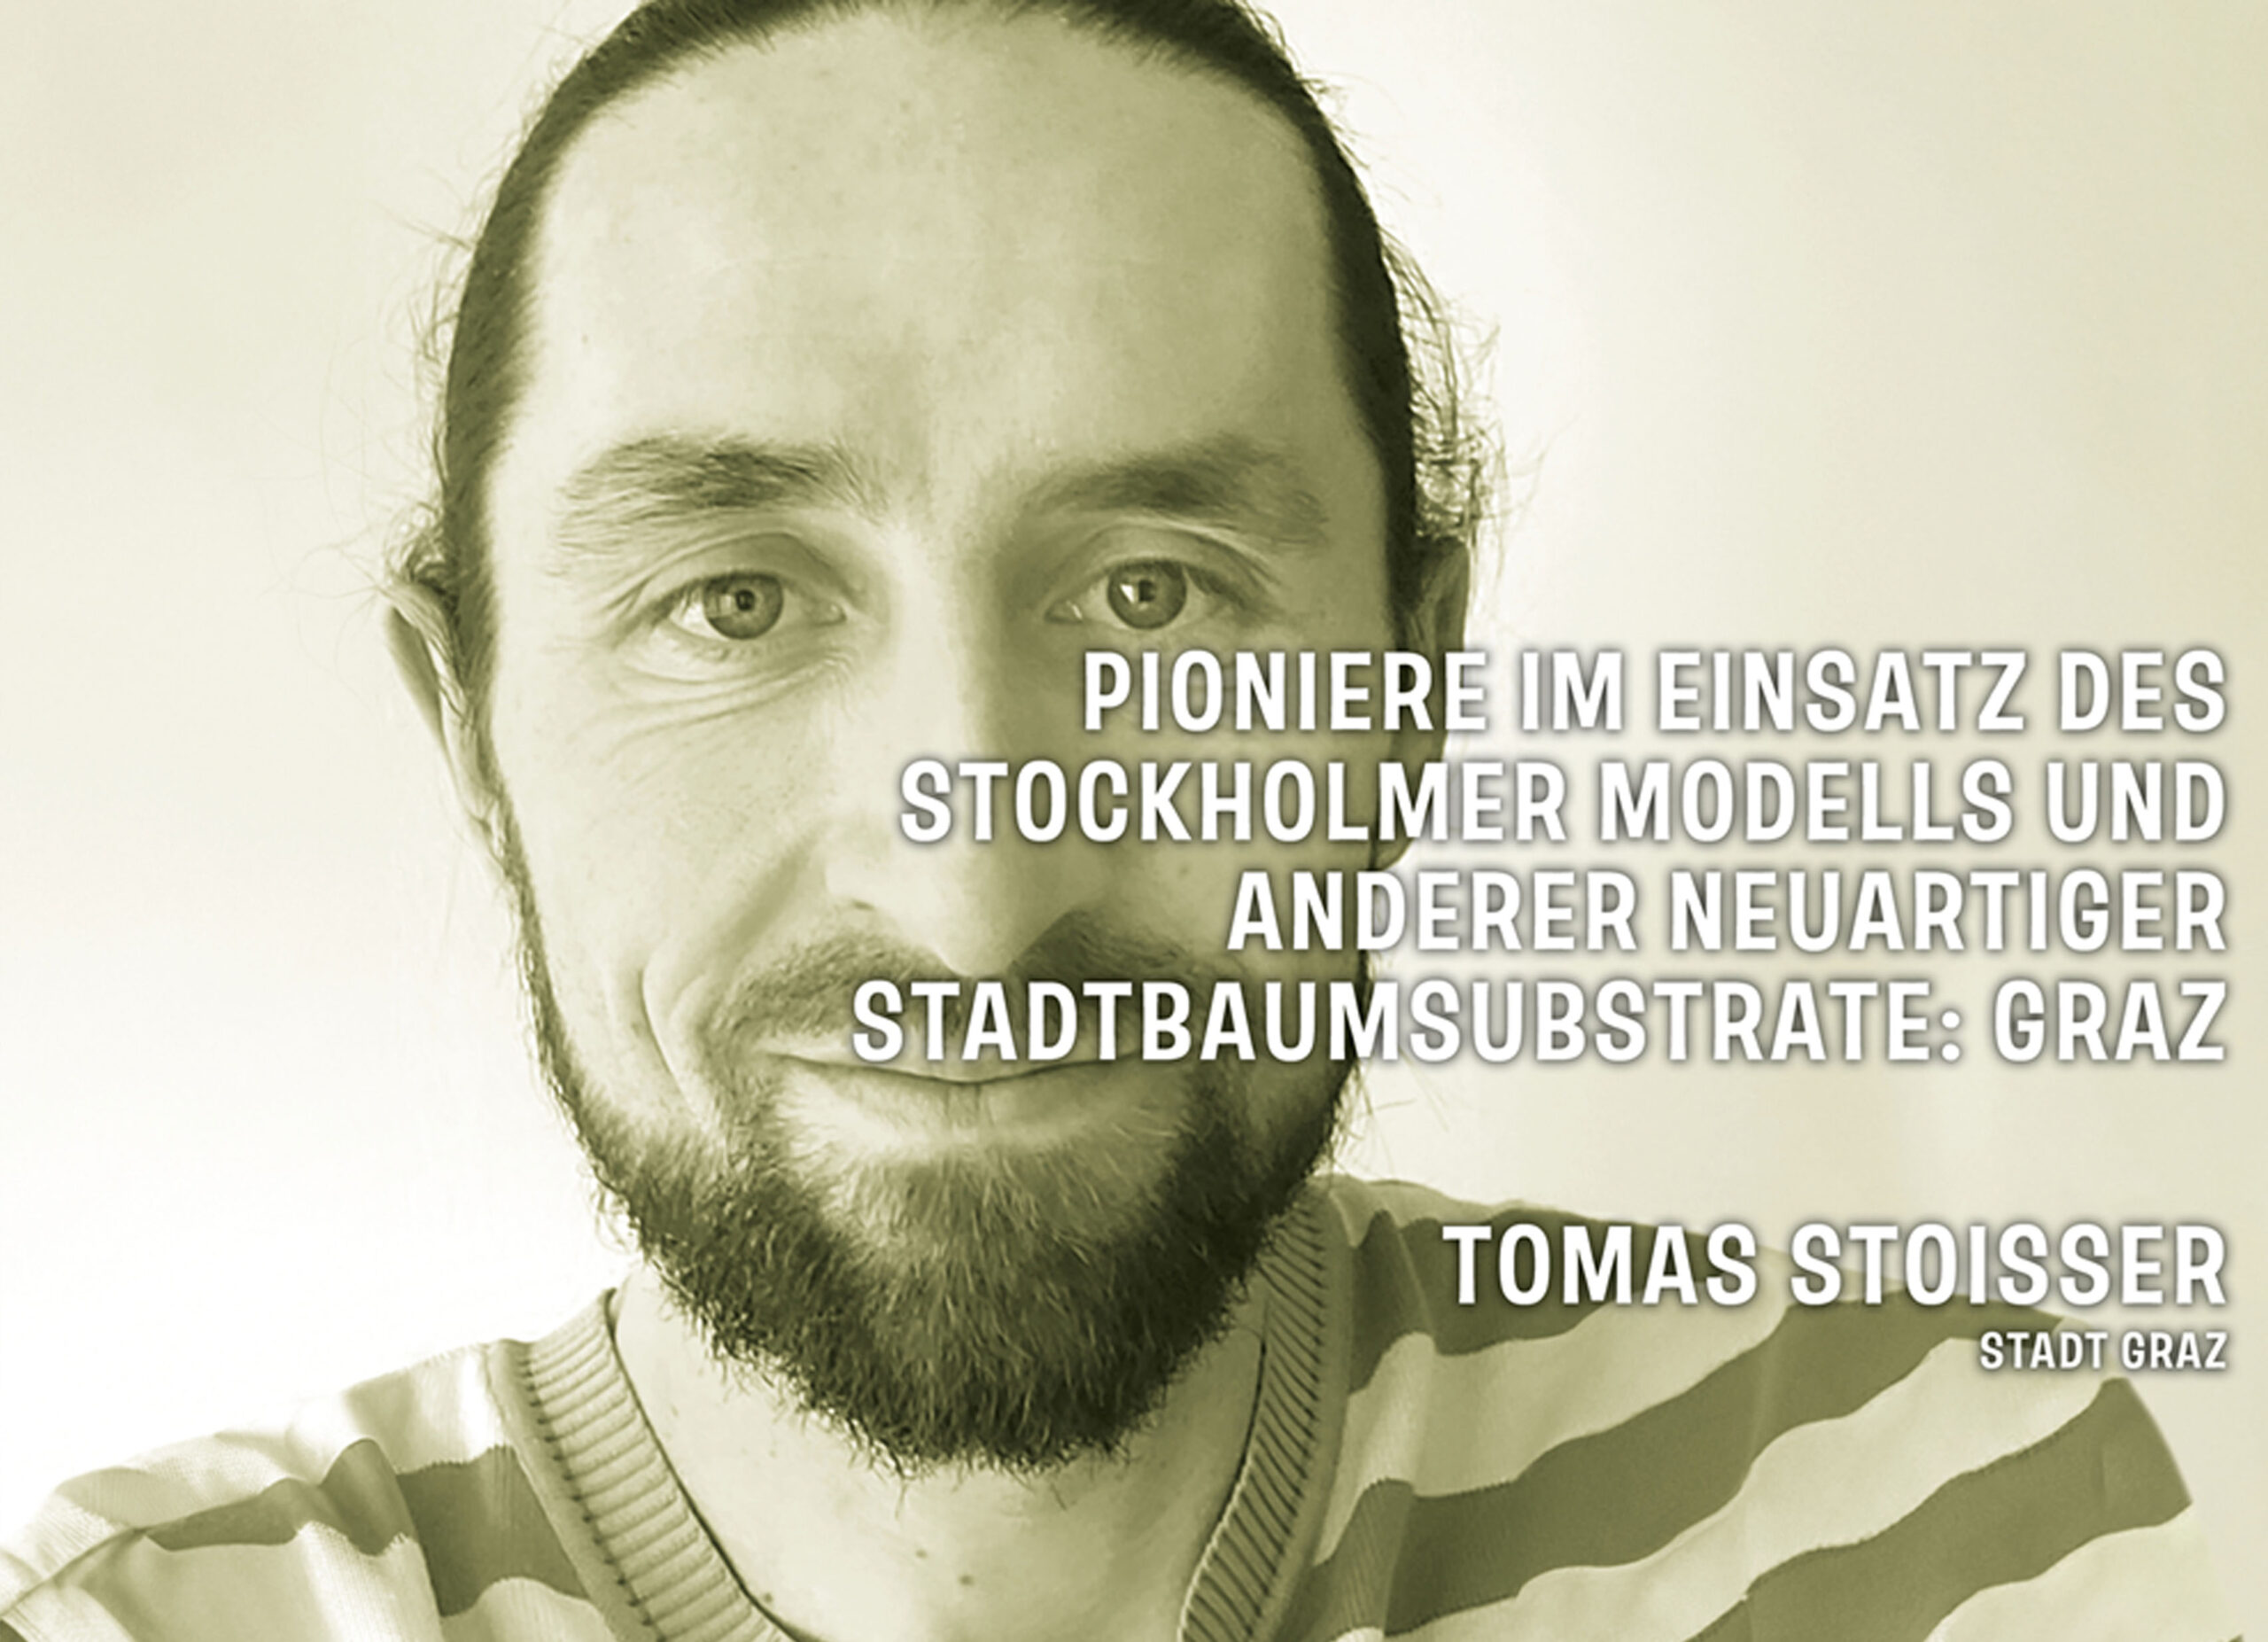 Tomas Stoisser